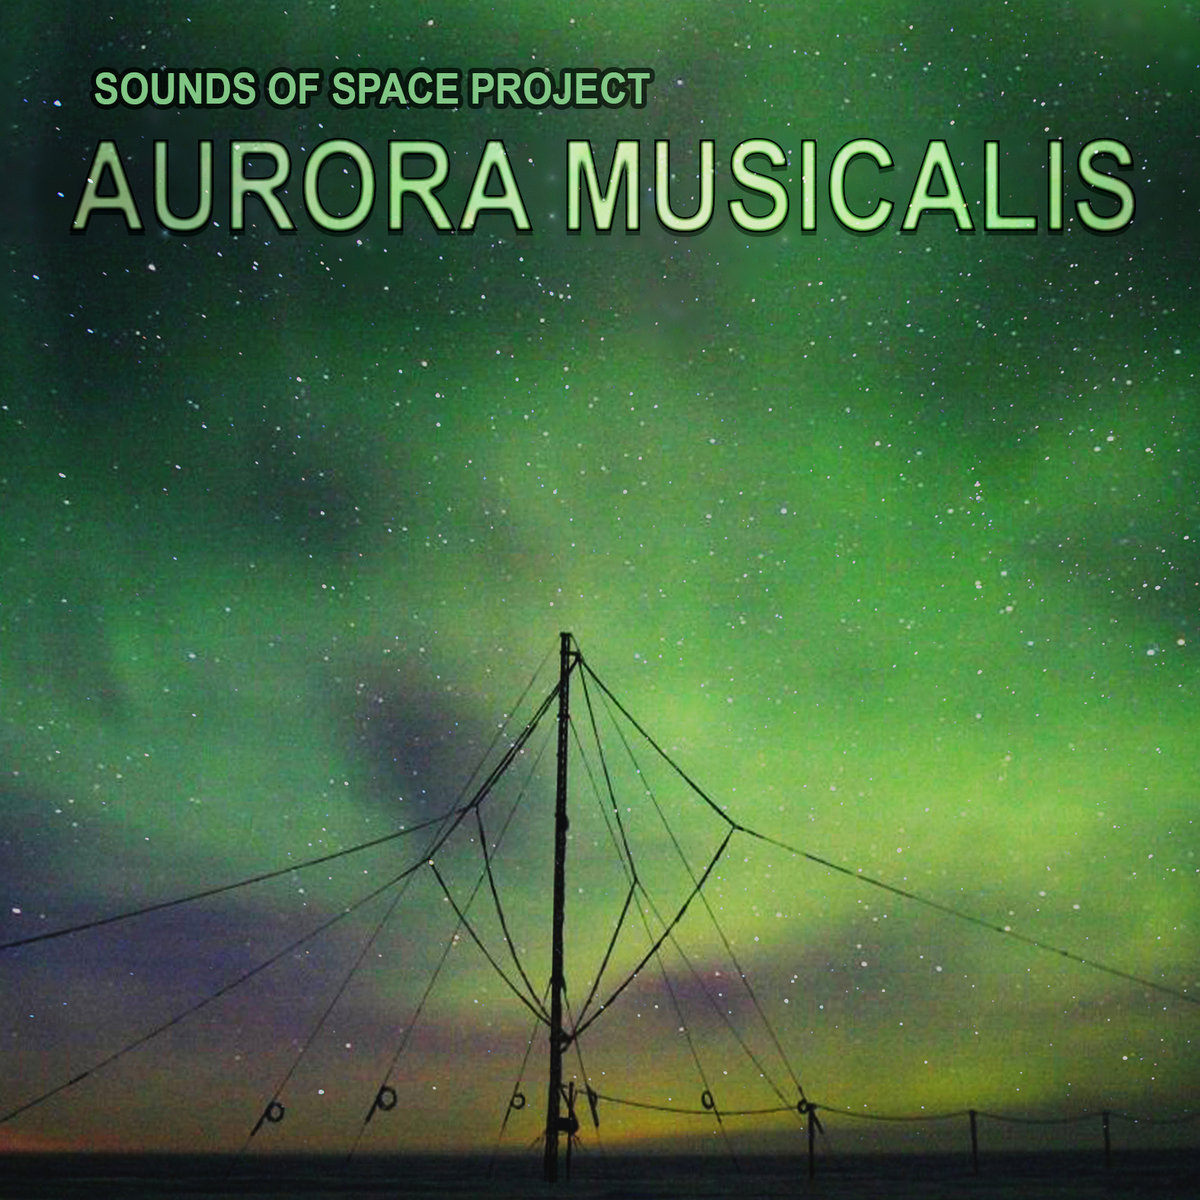 Scarborough Fair - song and lyrics by AURORA